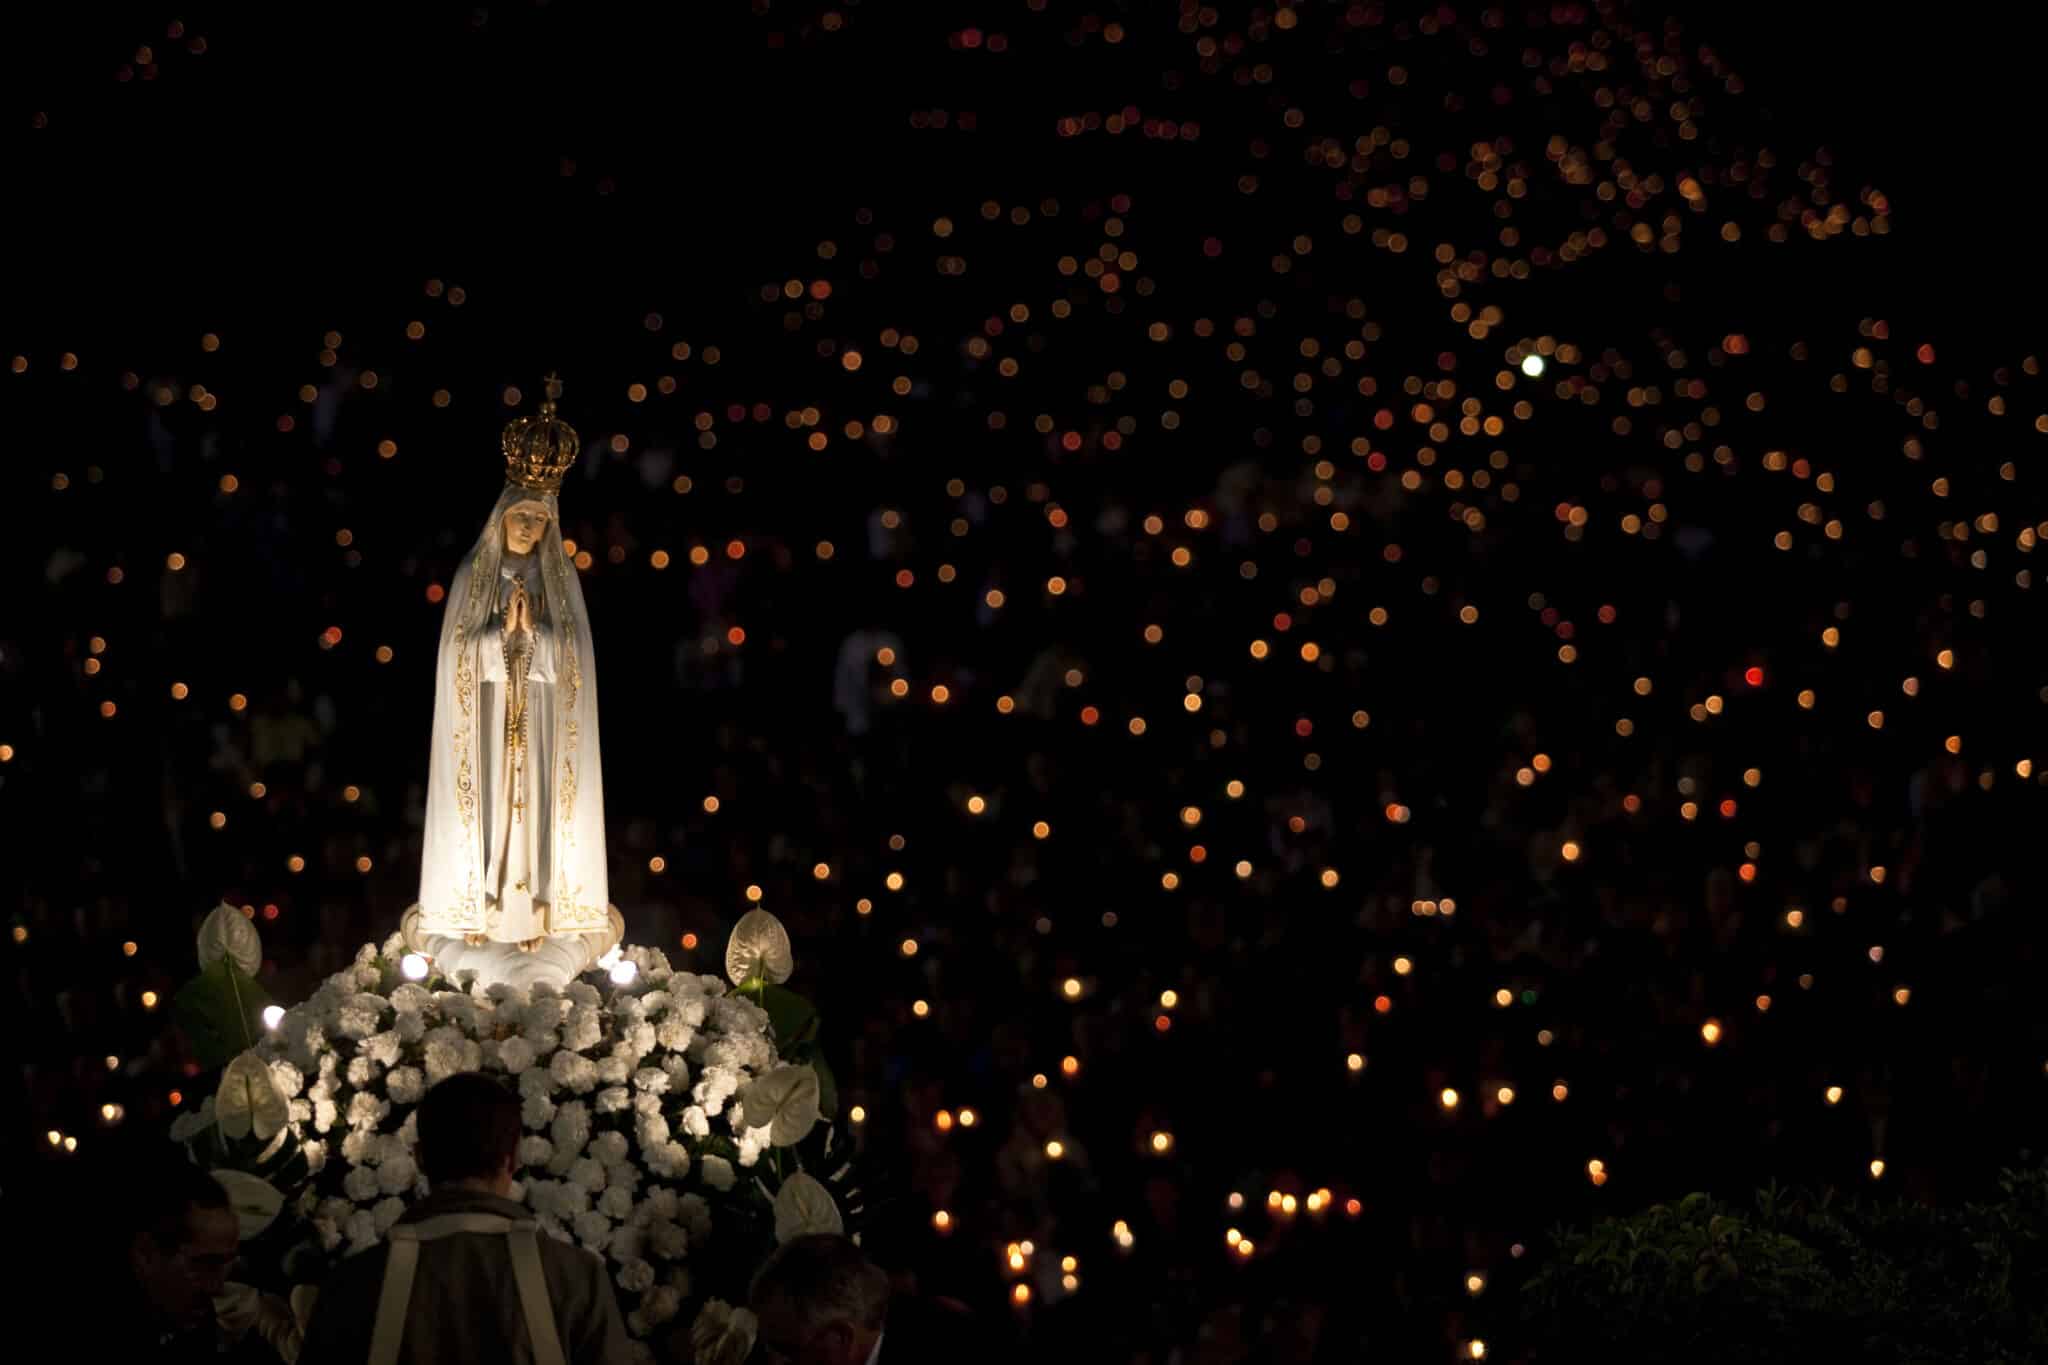 Fatima statue in Portugal